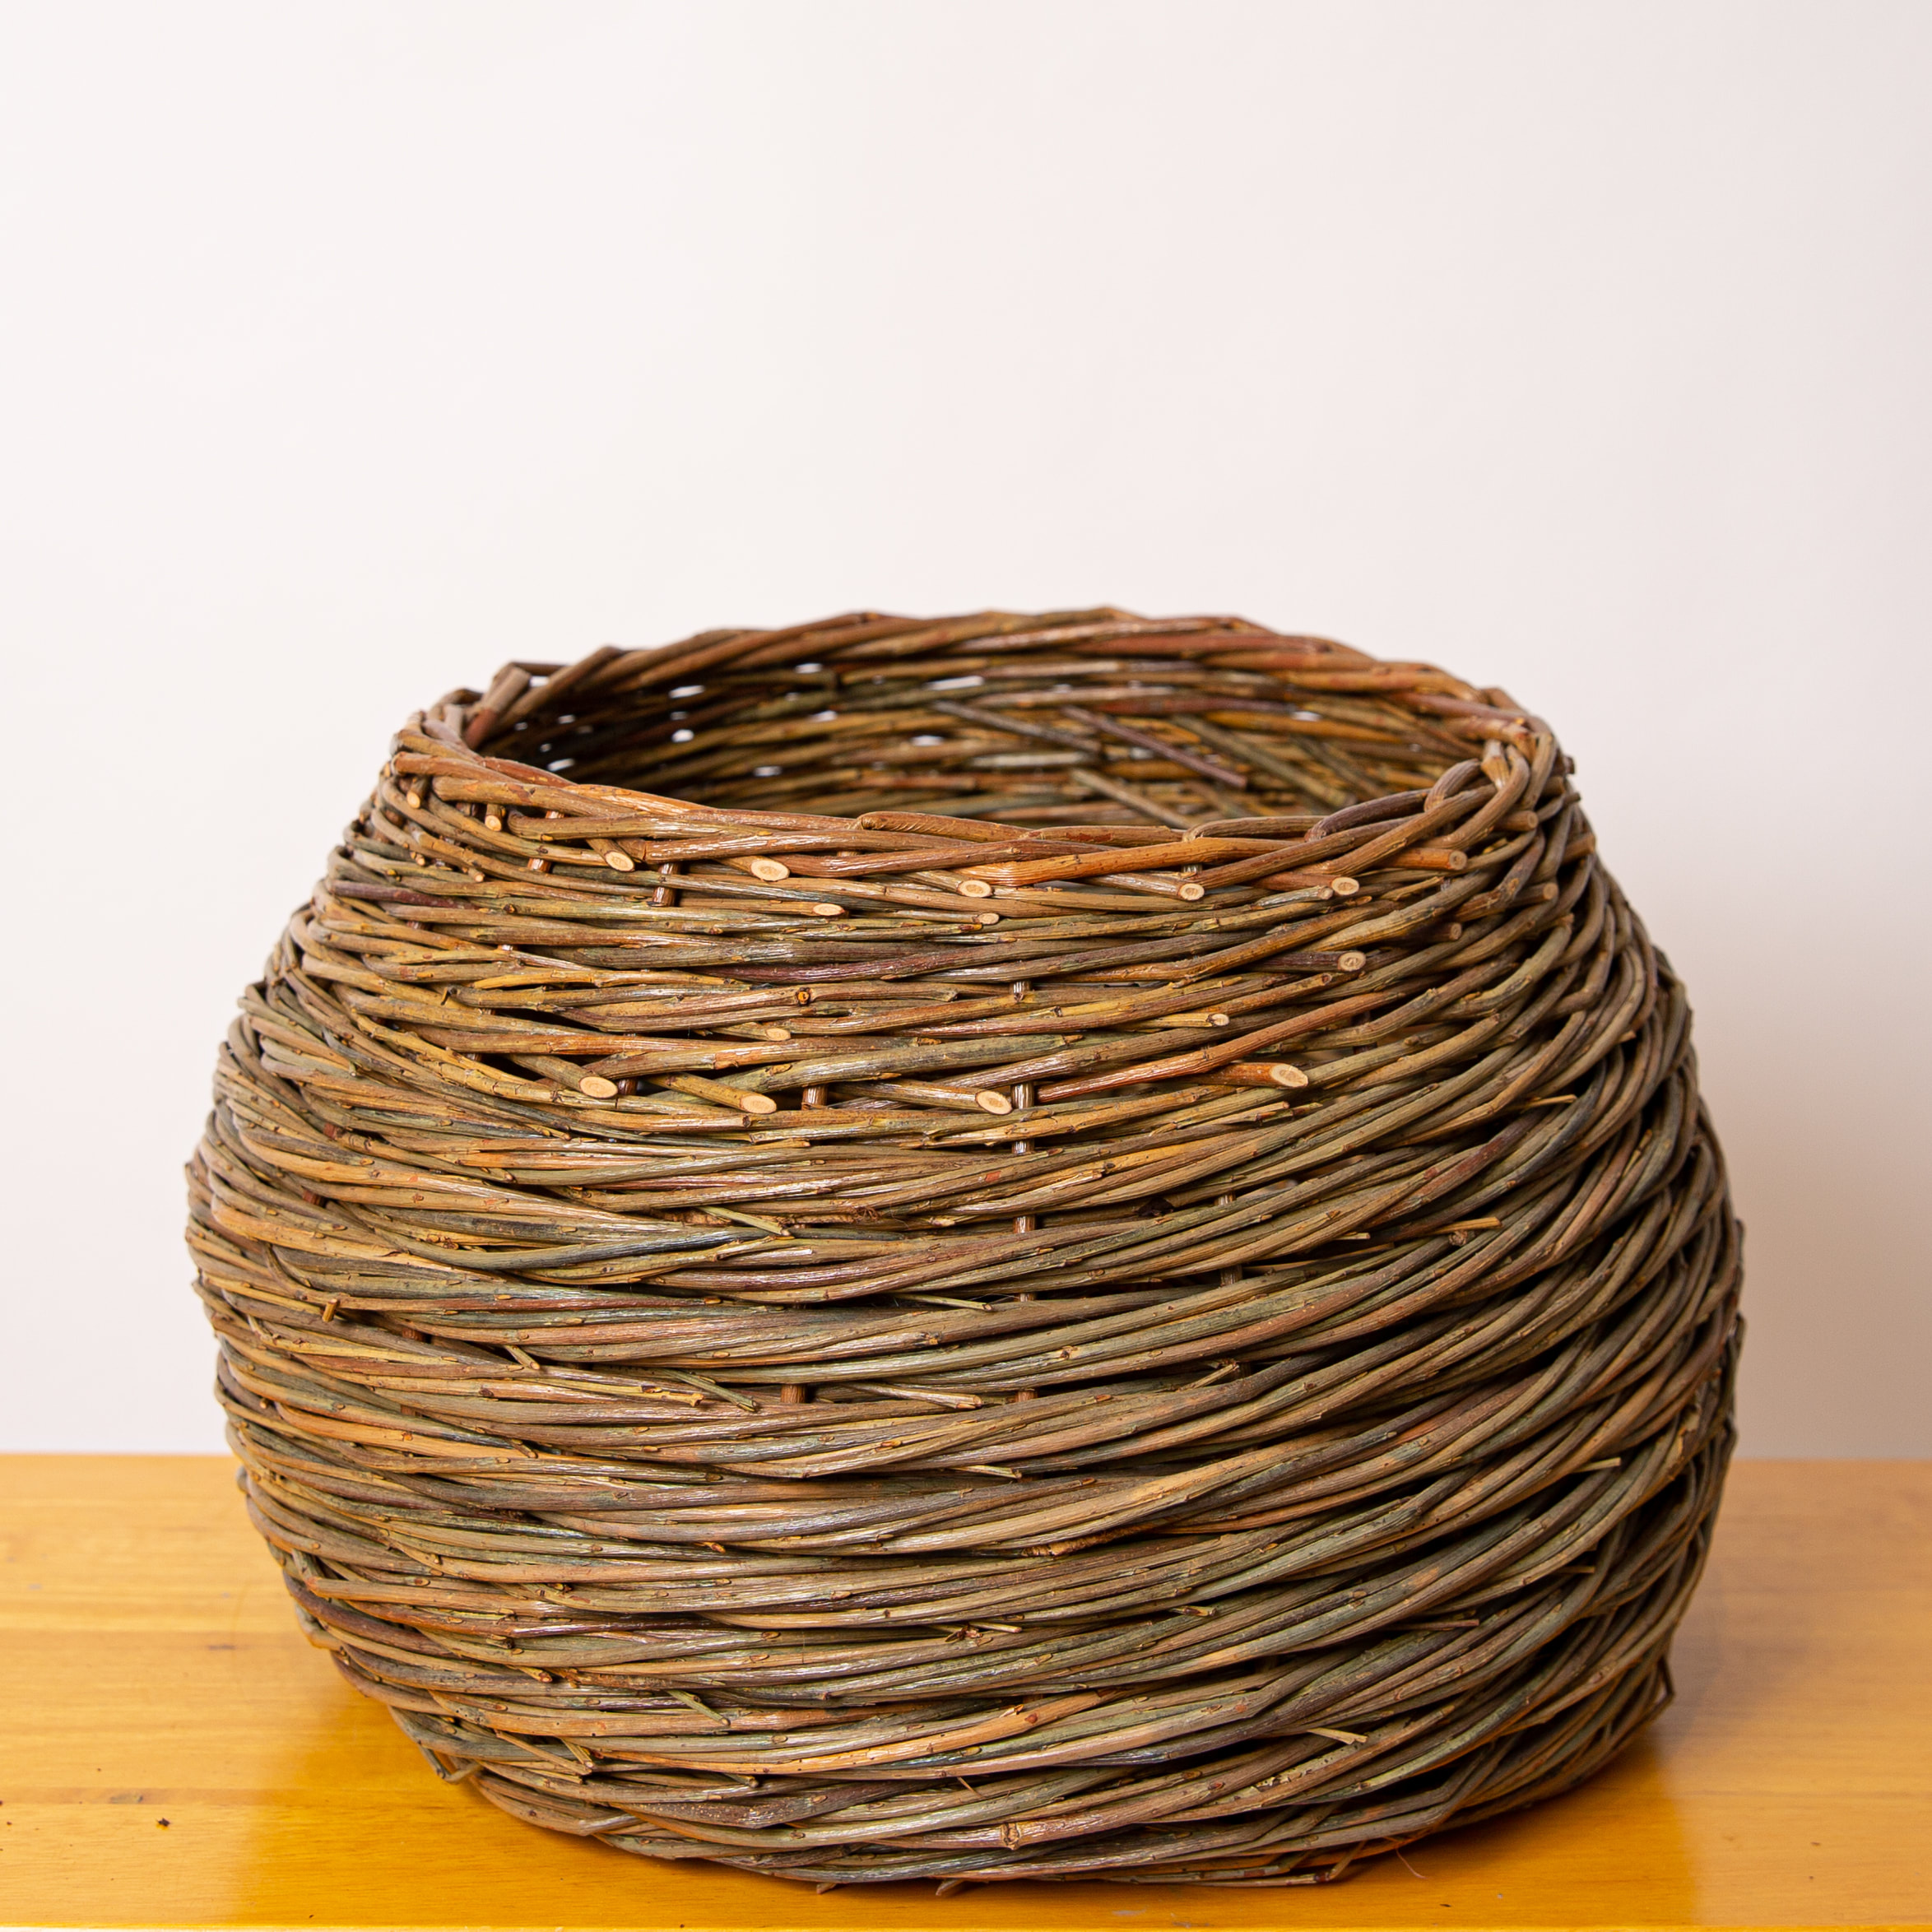 Roped Coil Medium Size Basket